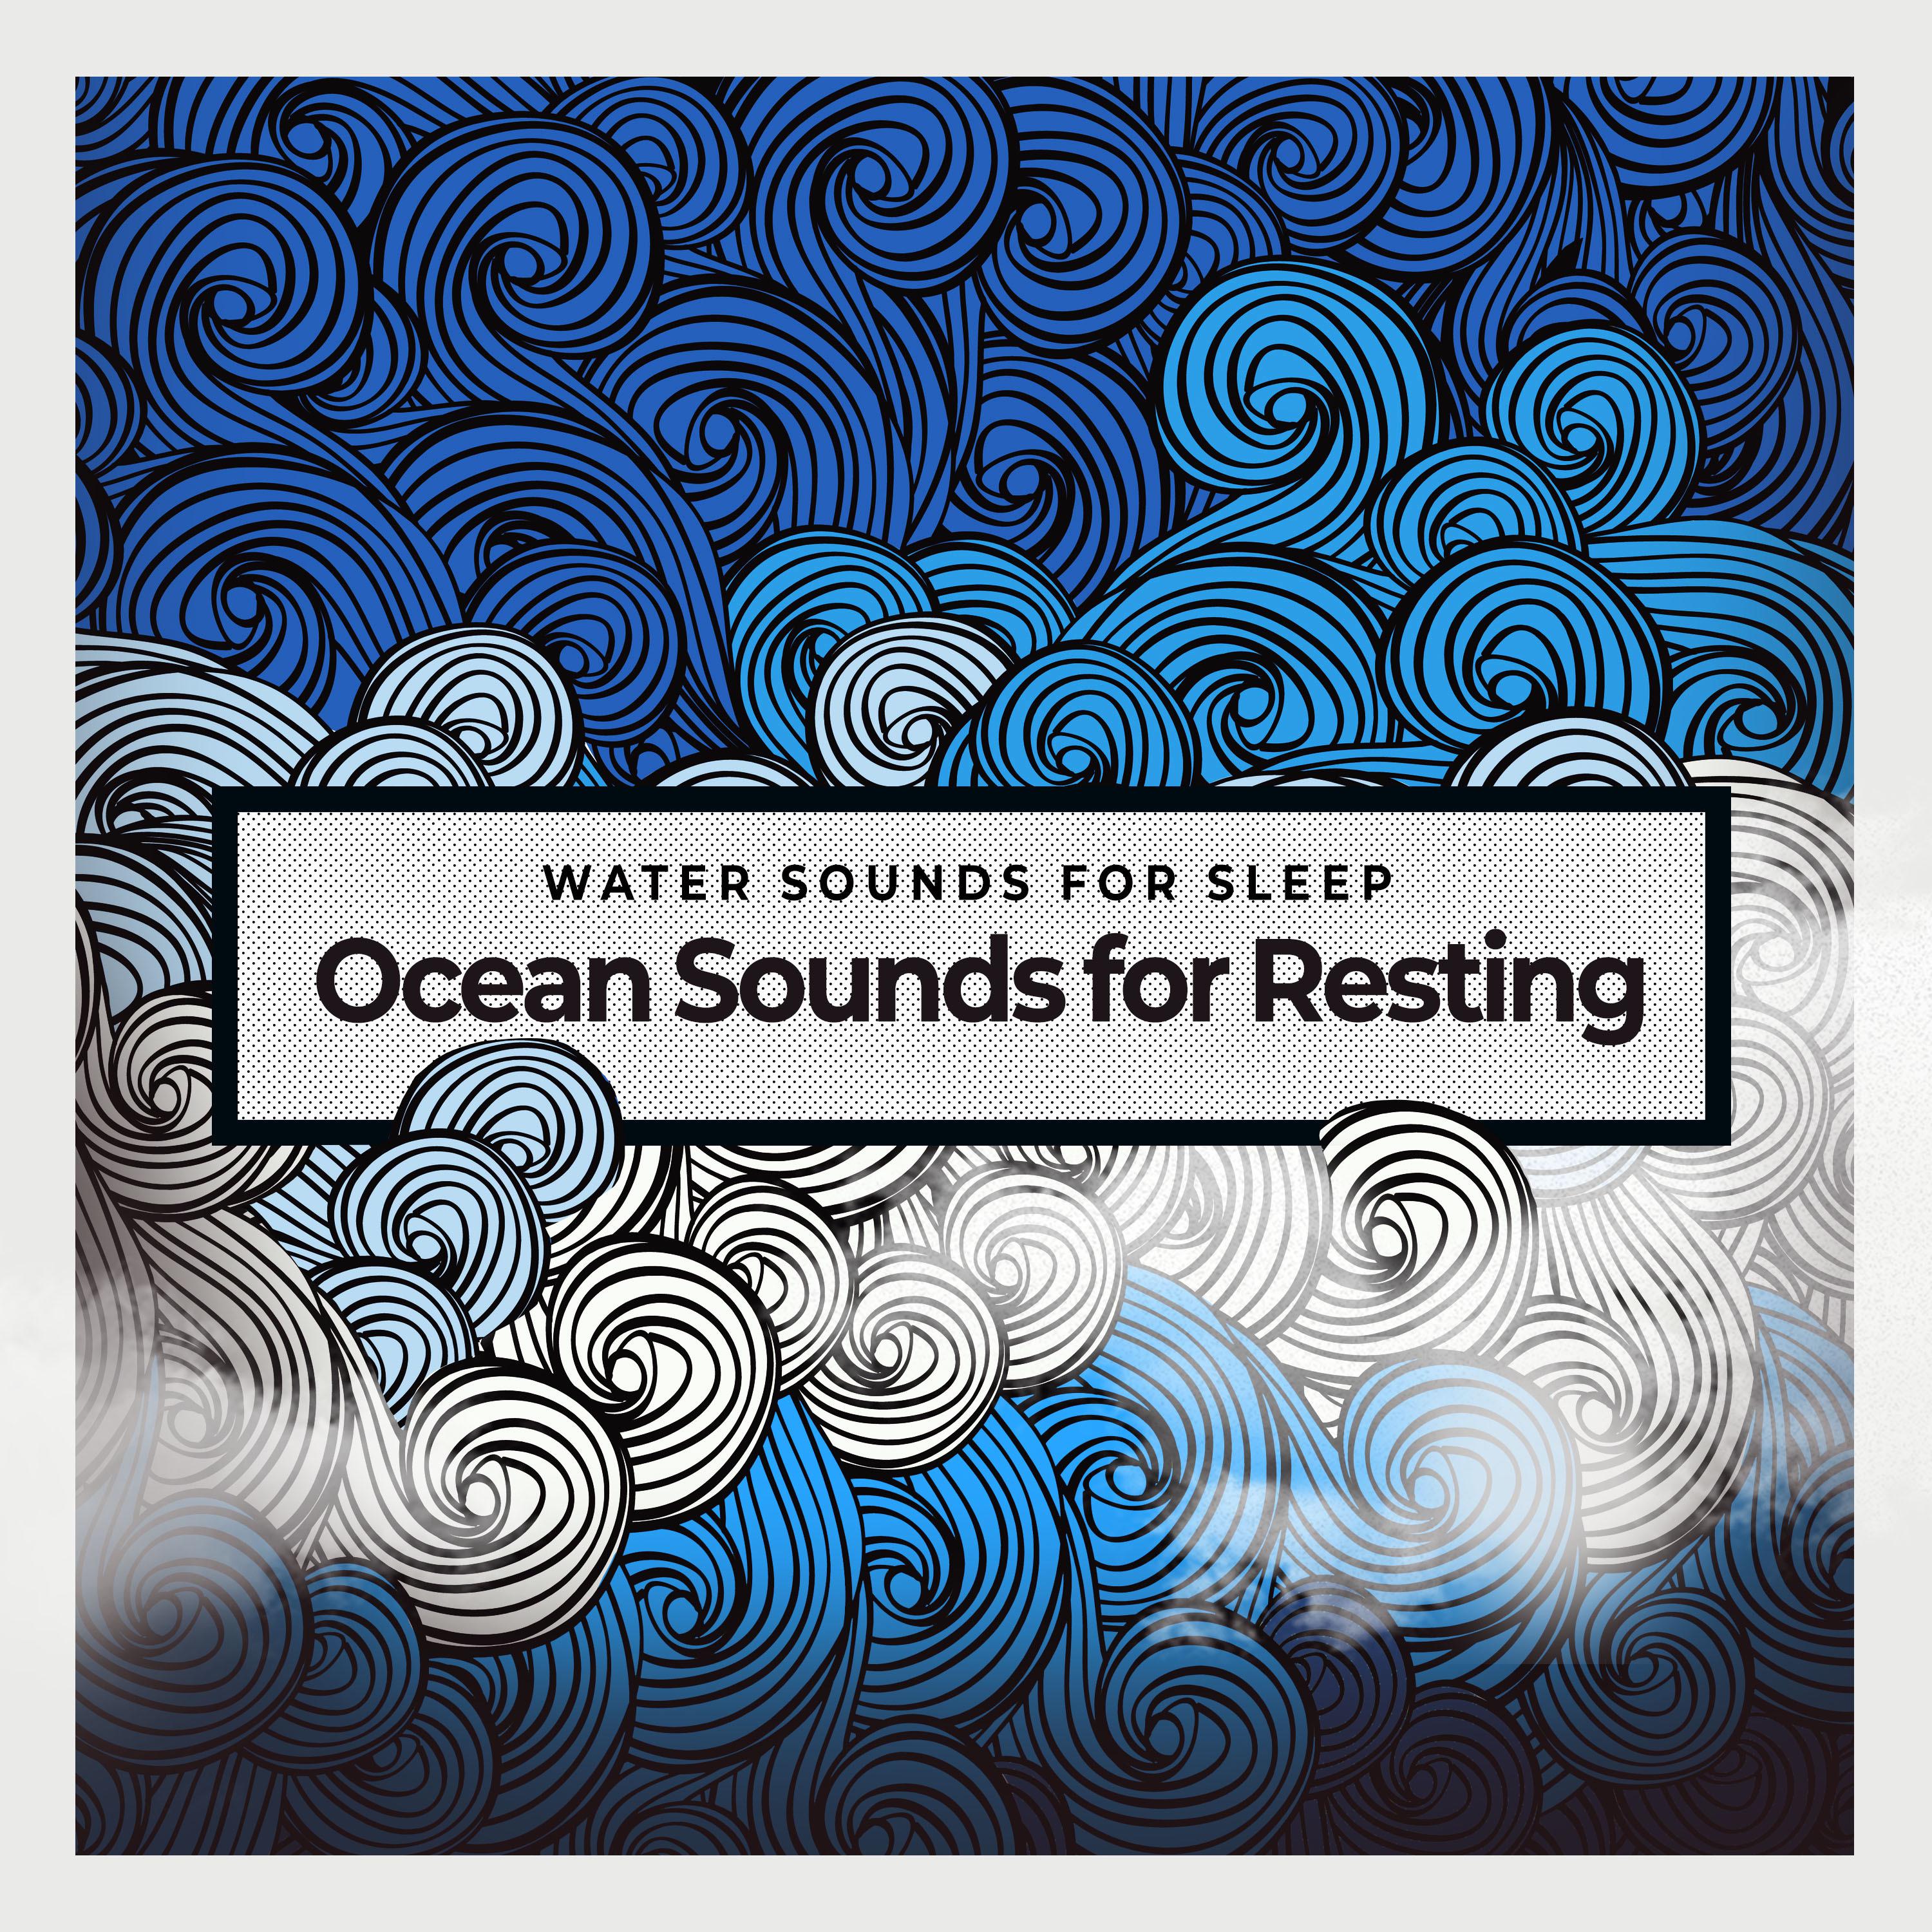 Ocean Sounds for Resting